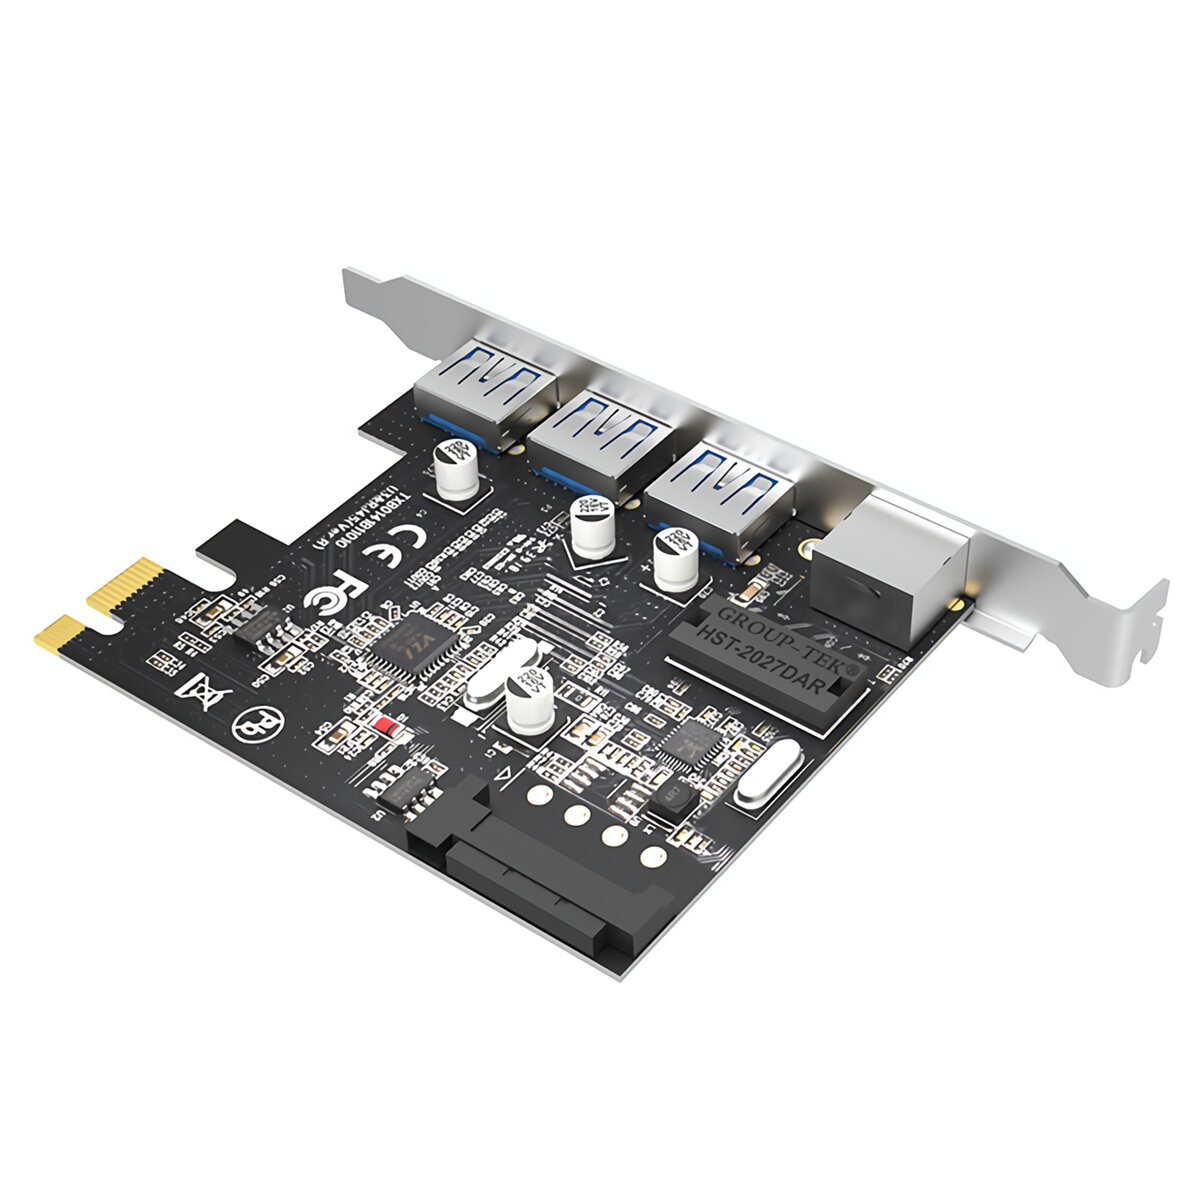 EDUP EP-9618 Wired PCIE Card 10/100/1000Mbps Gigabit Networking 3-port USB3.0 Hub Expansion Network 